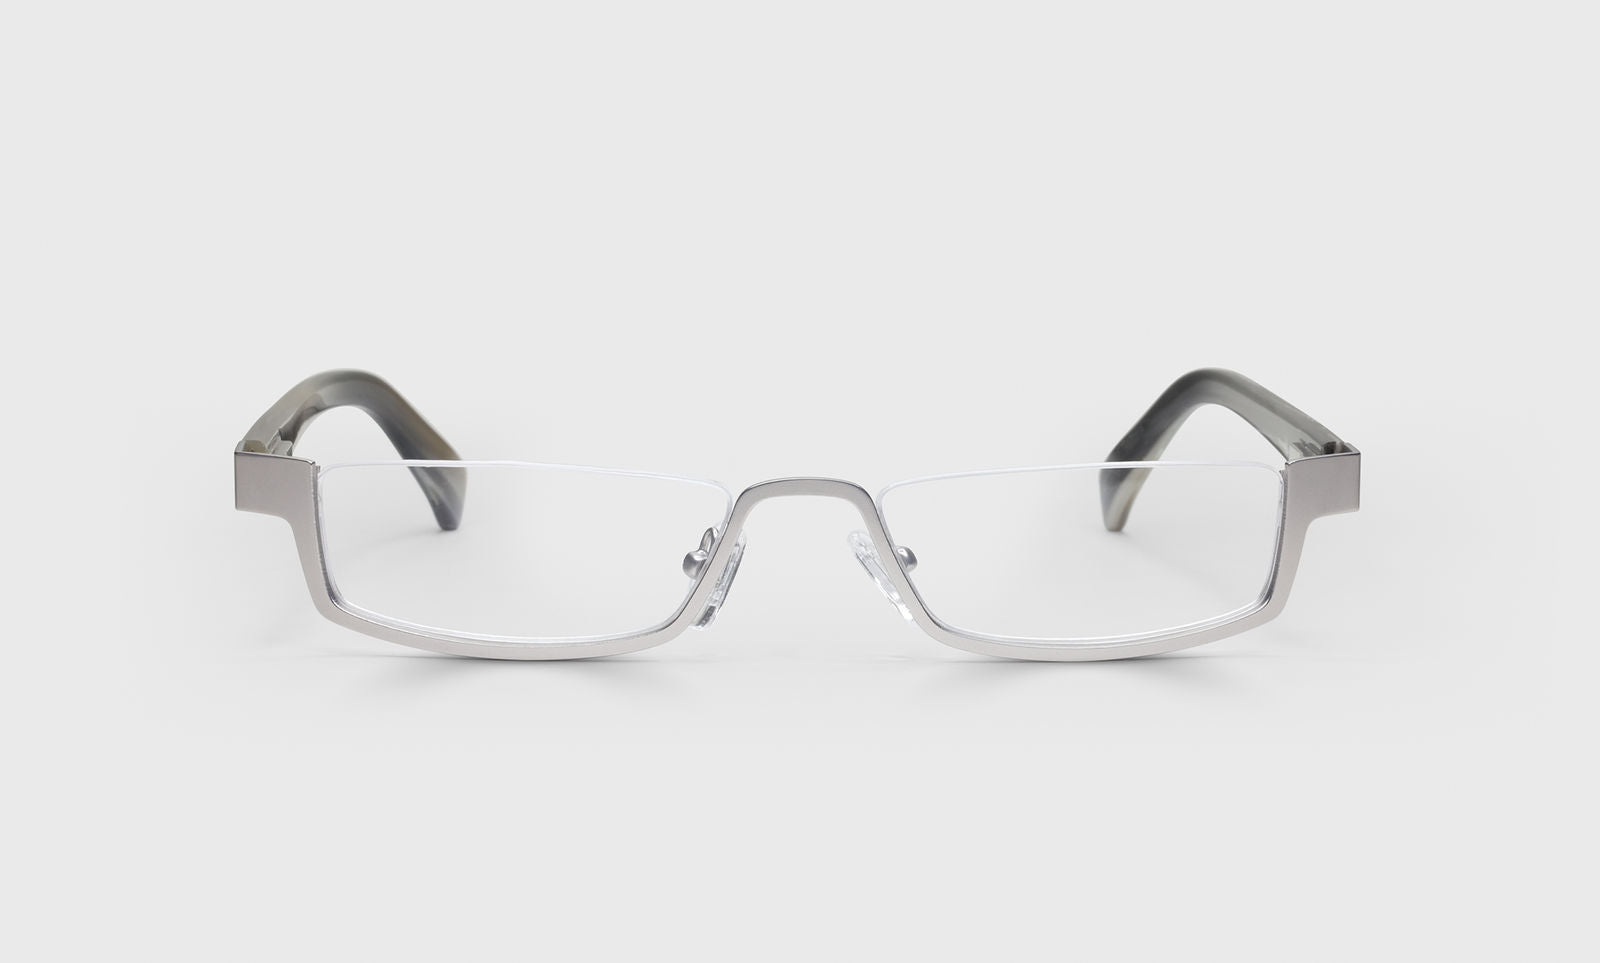 H1_eyebobs premium designer peek performer readers, blue light and prescription glasses in matte silver